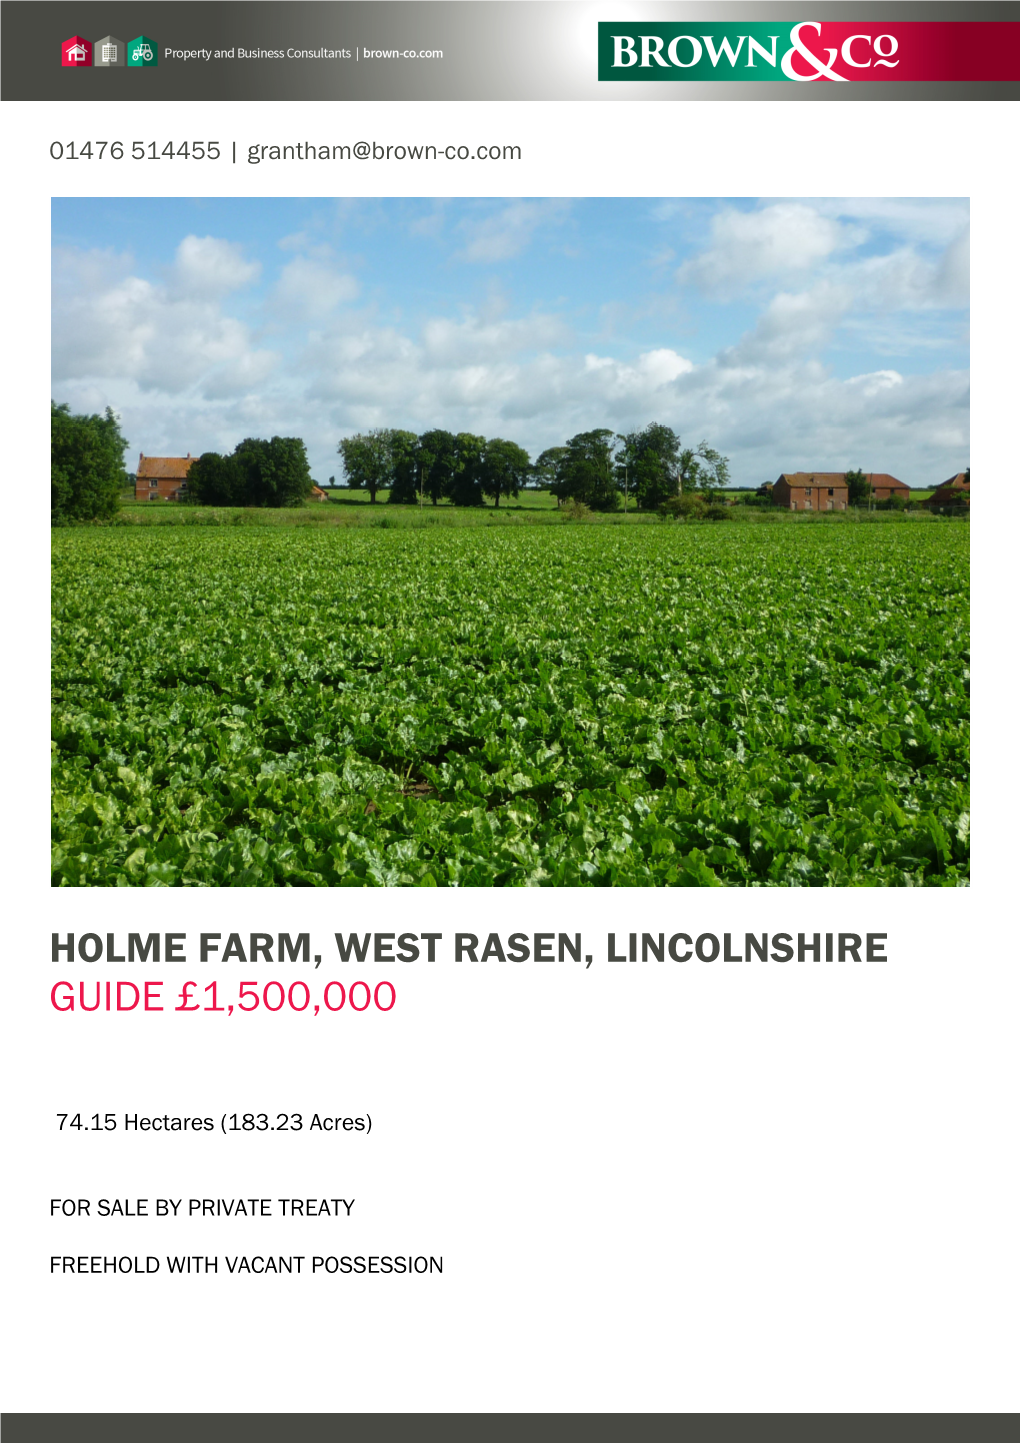 Holme Farm, West Rasen, Lincolnshire Guide £1,500,000